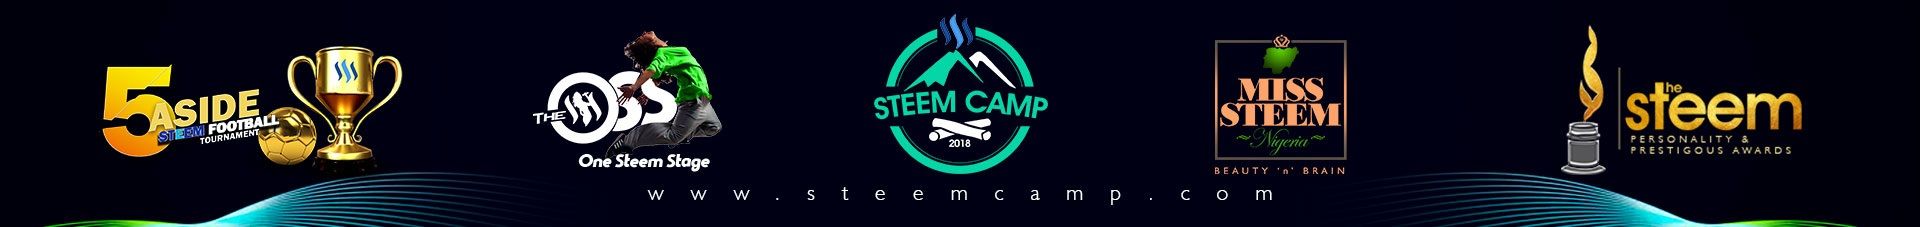 steem.camp-slider.jpg